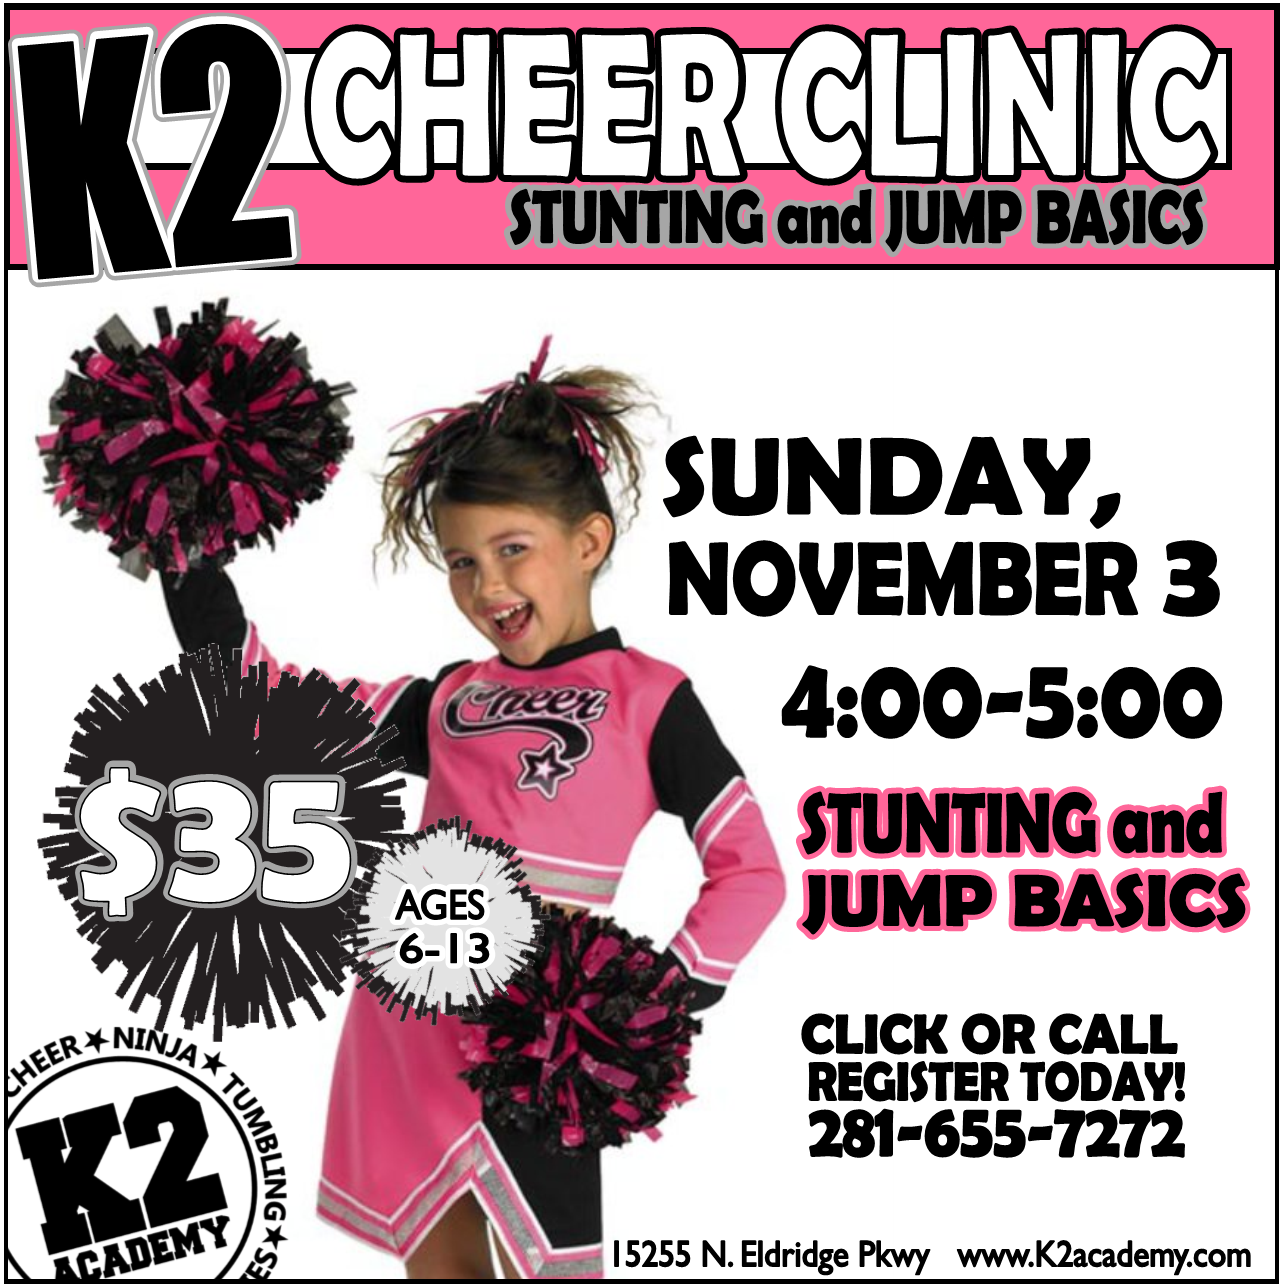 Cheer clinic Stunts clinic